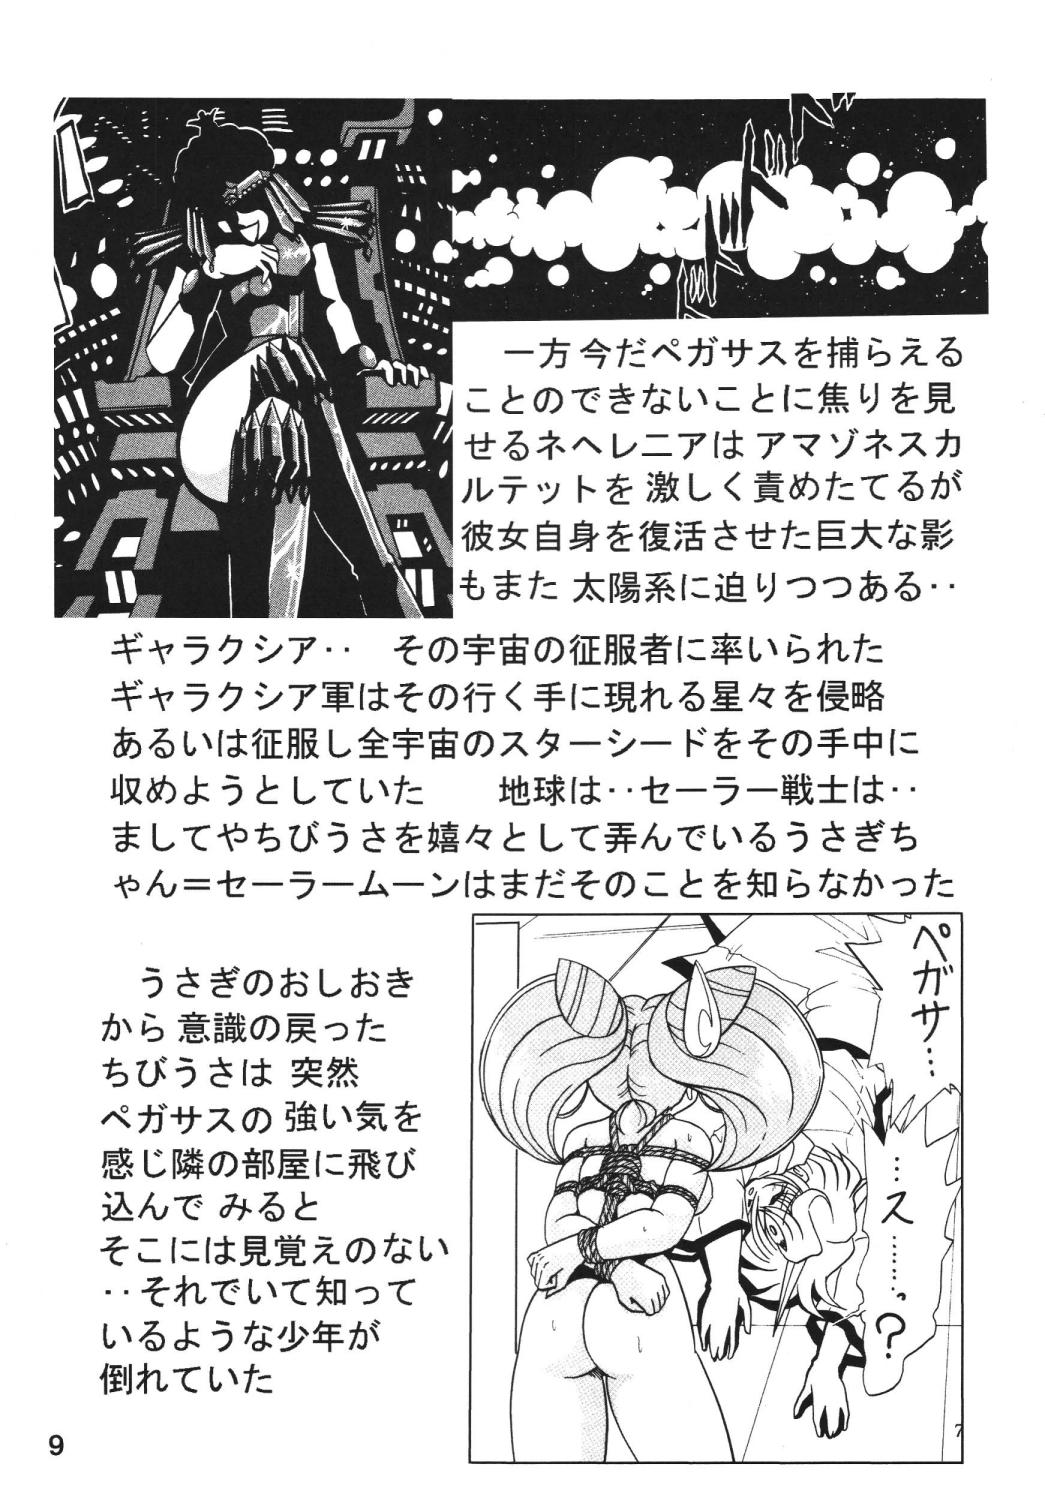 Assfingering Silent Saturn SS vol. 7 - Sailor moon Couple Sex - Page 8